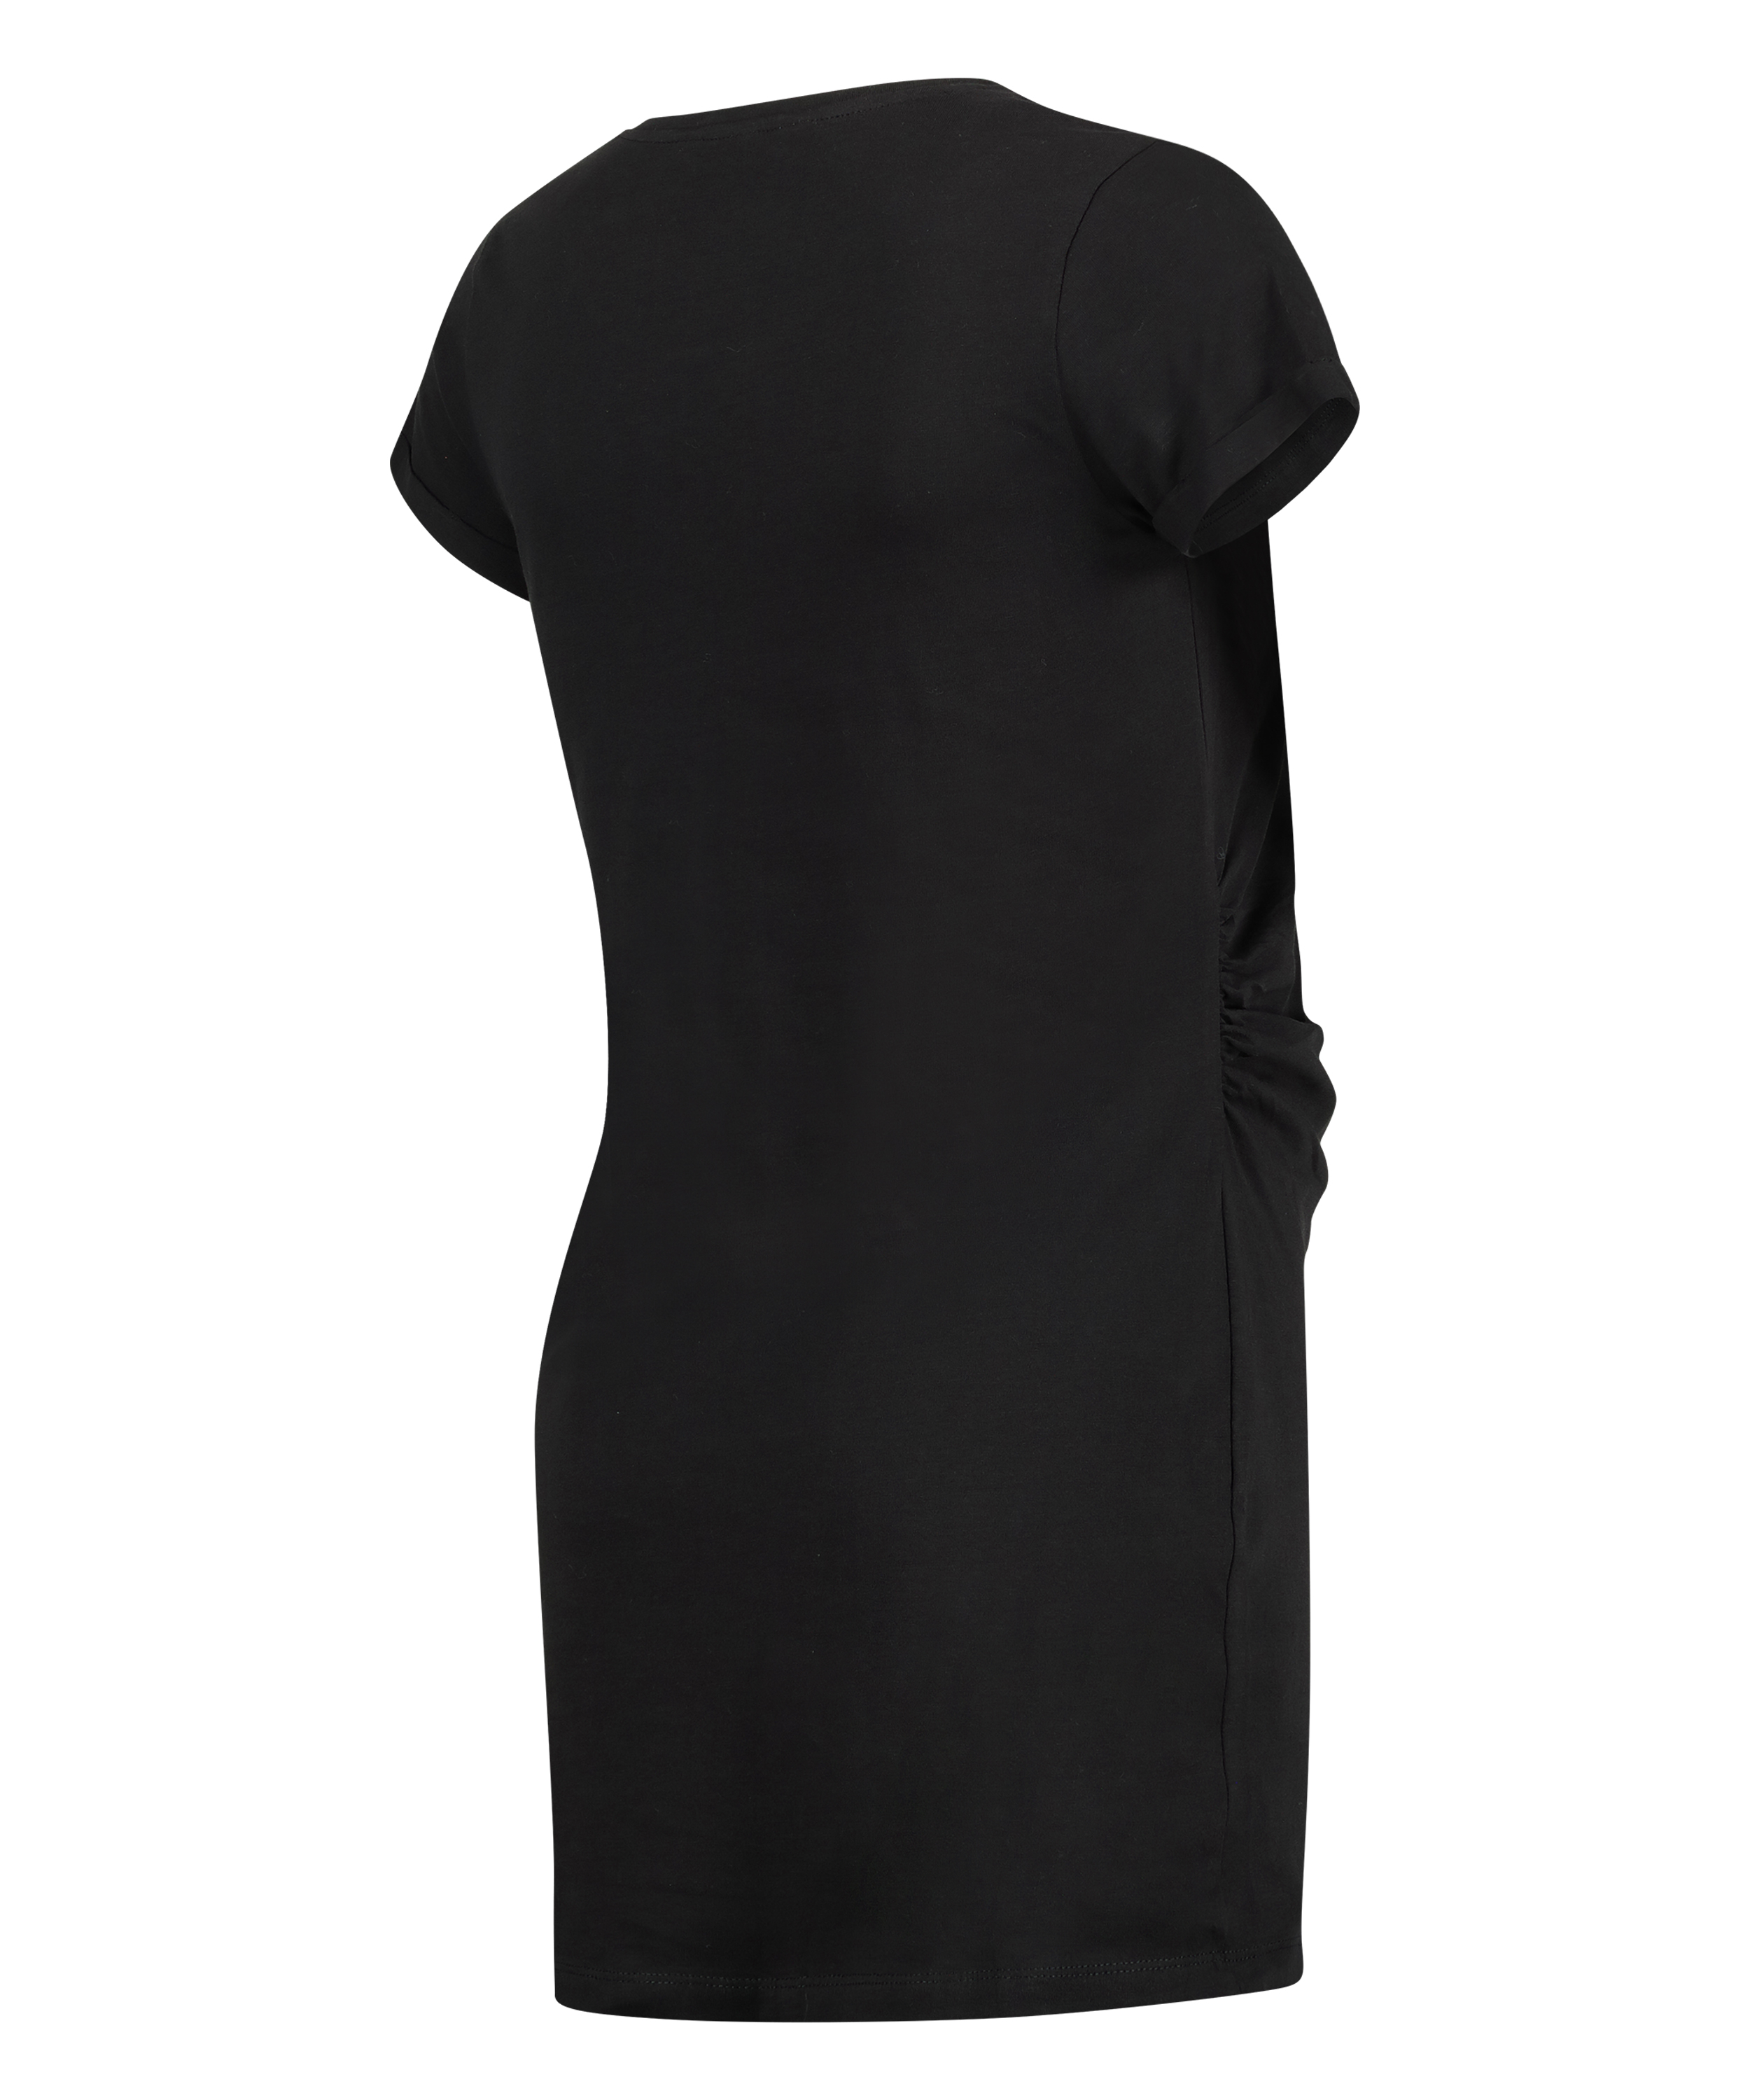 Short-Sleeved Maternity Nightshirt, Black, main